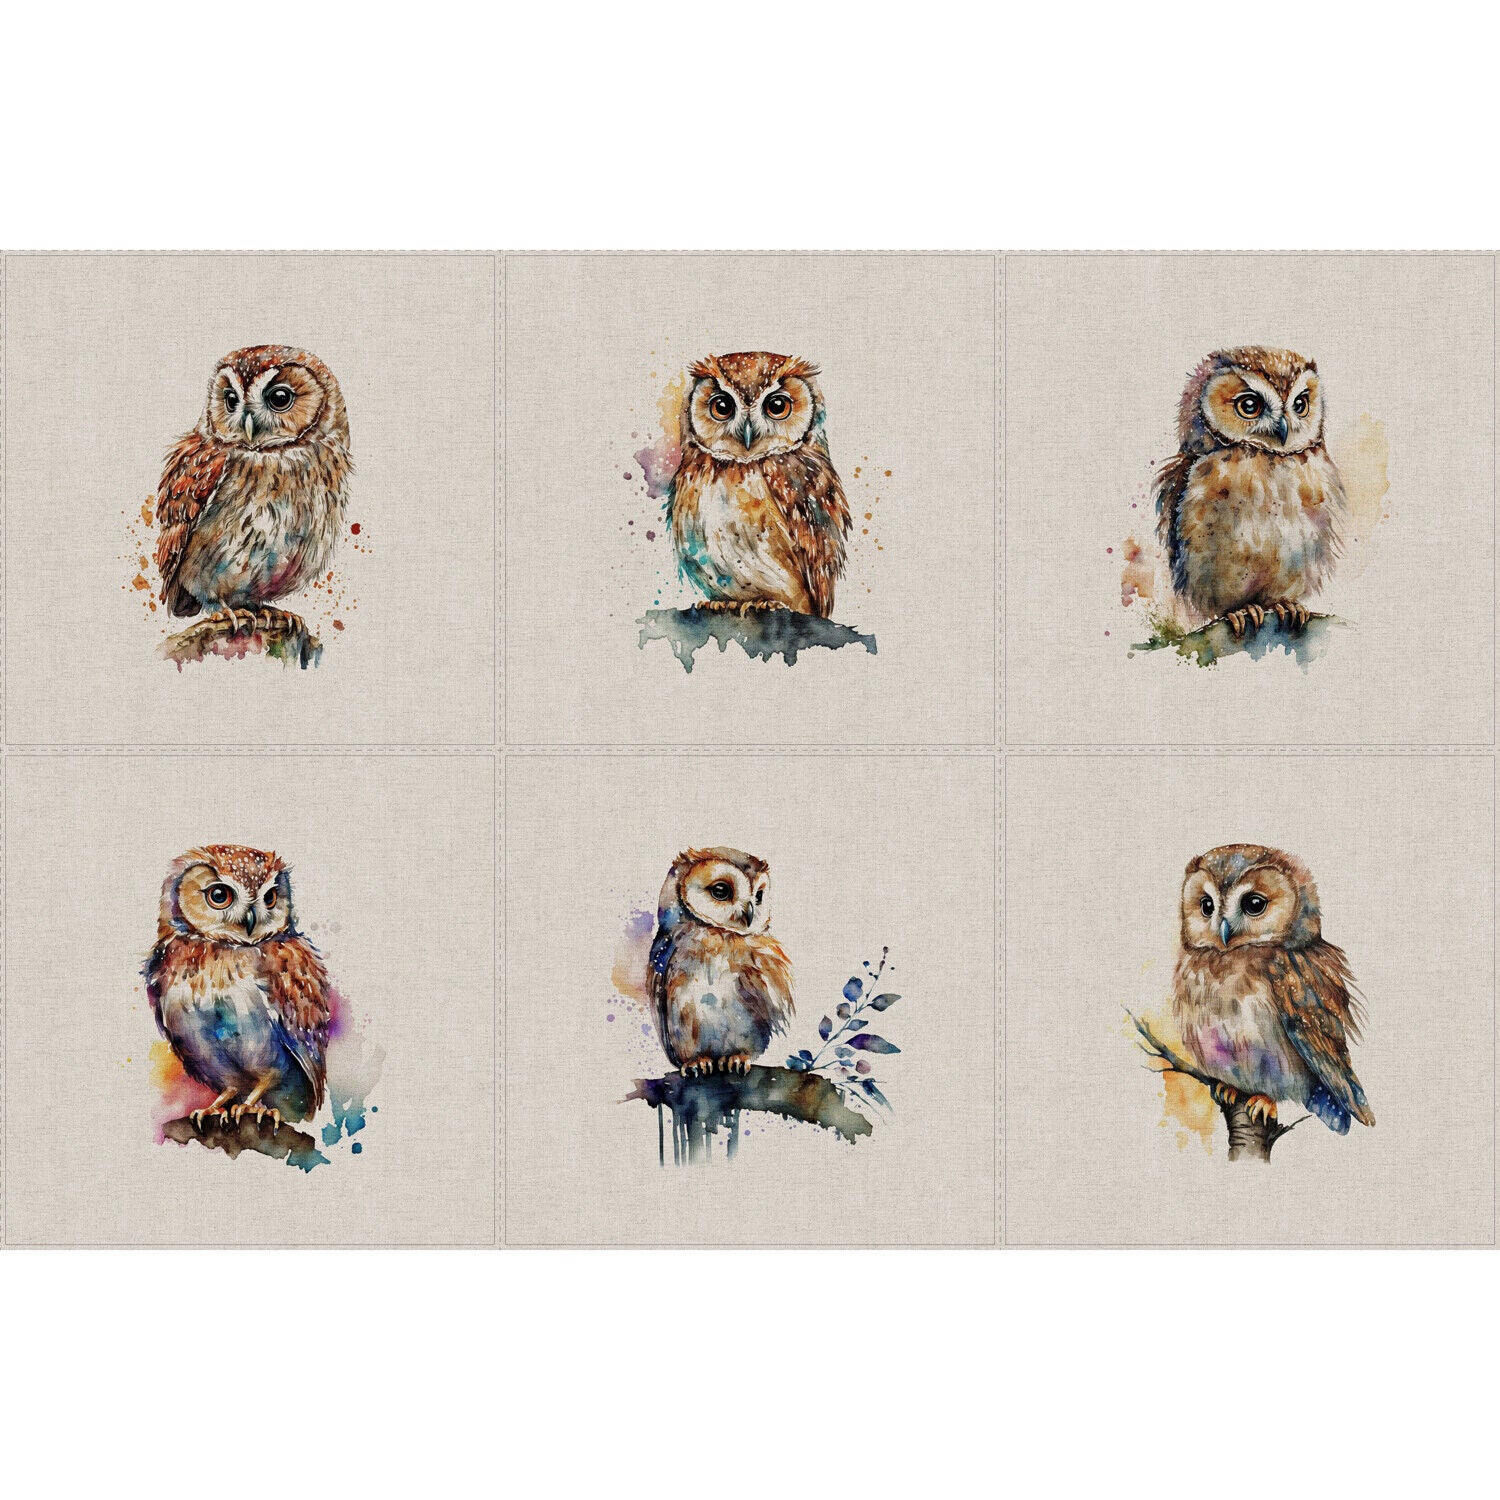 Owl Panel cushion linen look Cotton Rich Bird Birds Panel fabric M1794-2